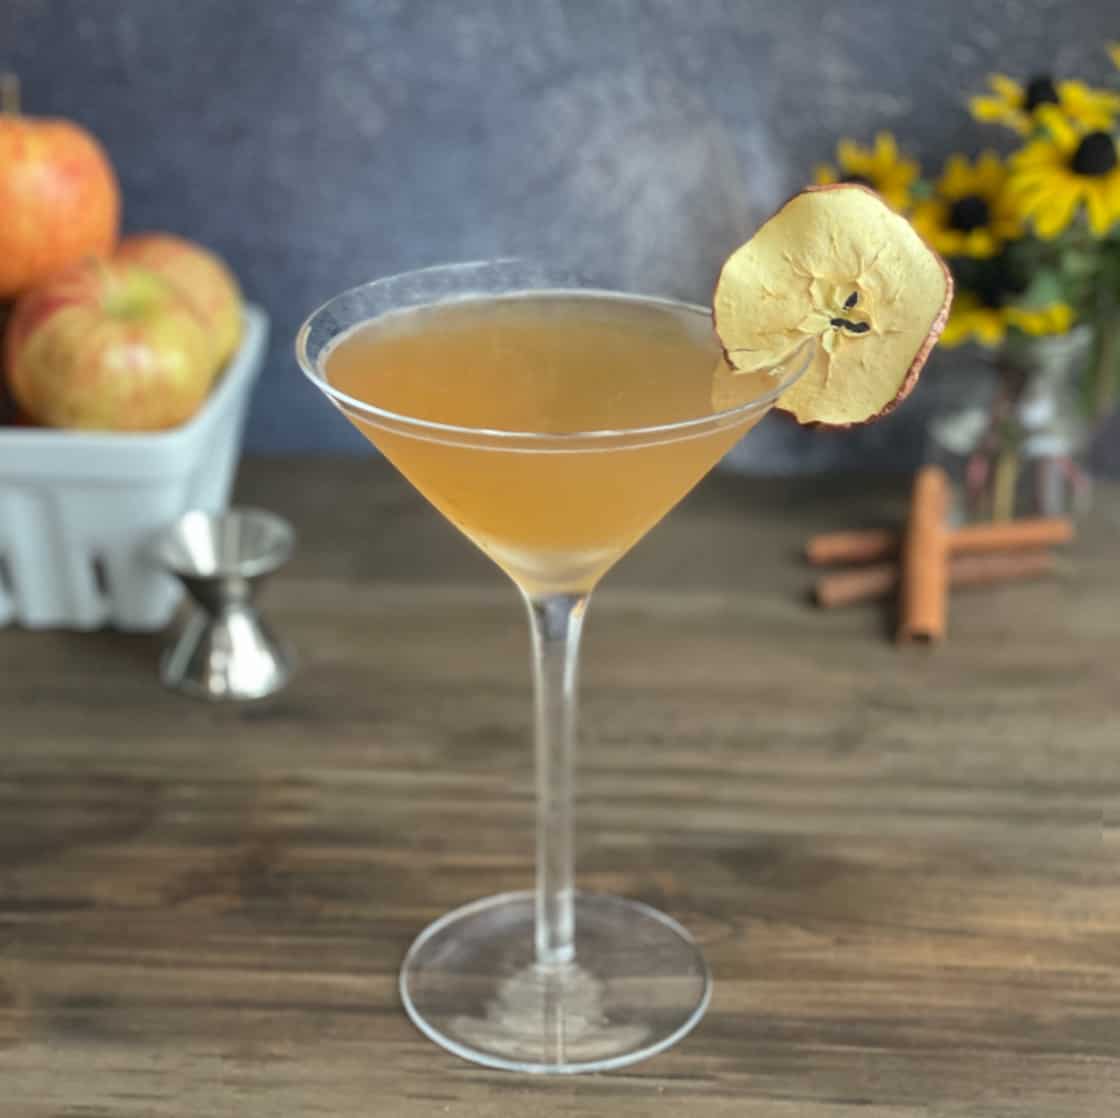 Apple cider martini in a martini glass with apple chip garnish